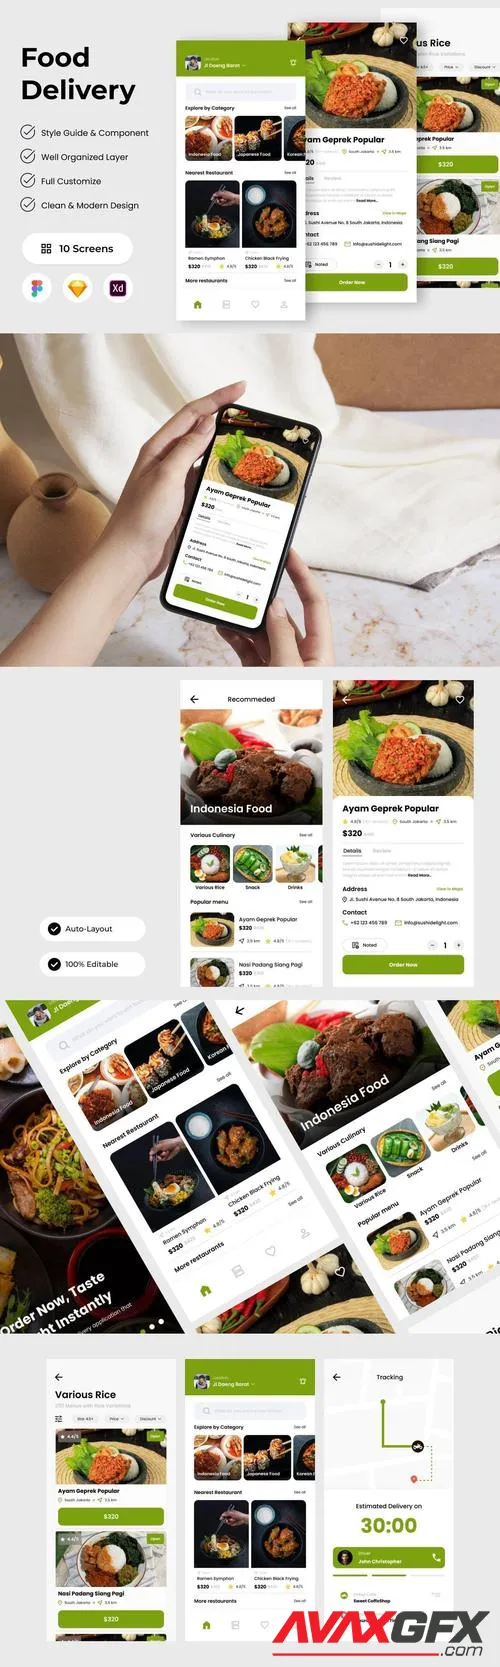 FlavorFleet - Food Delivery Mobile App